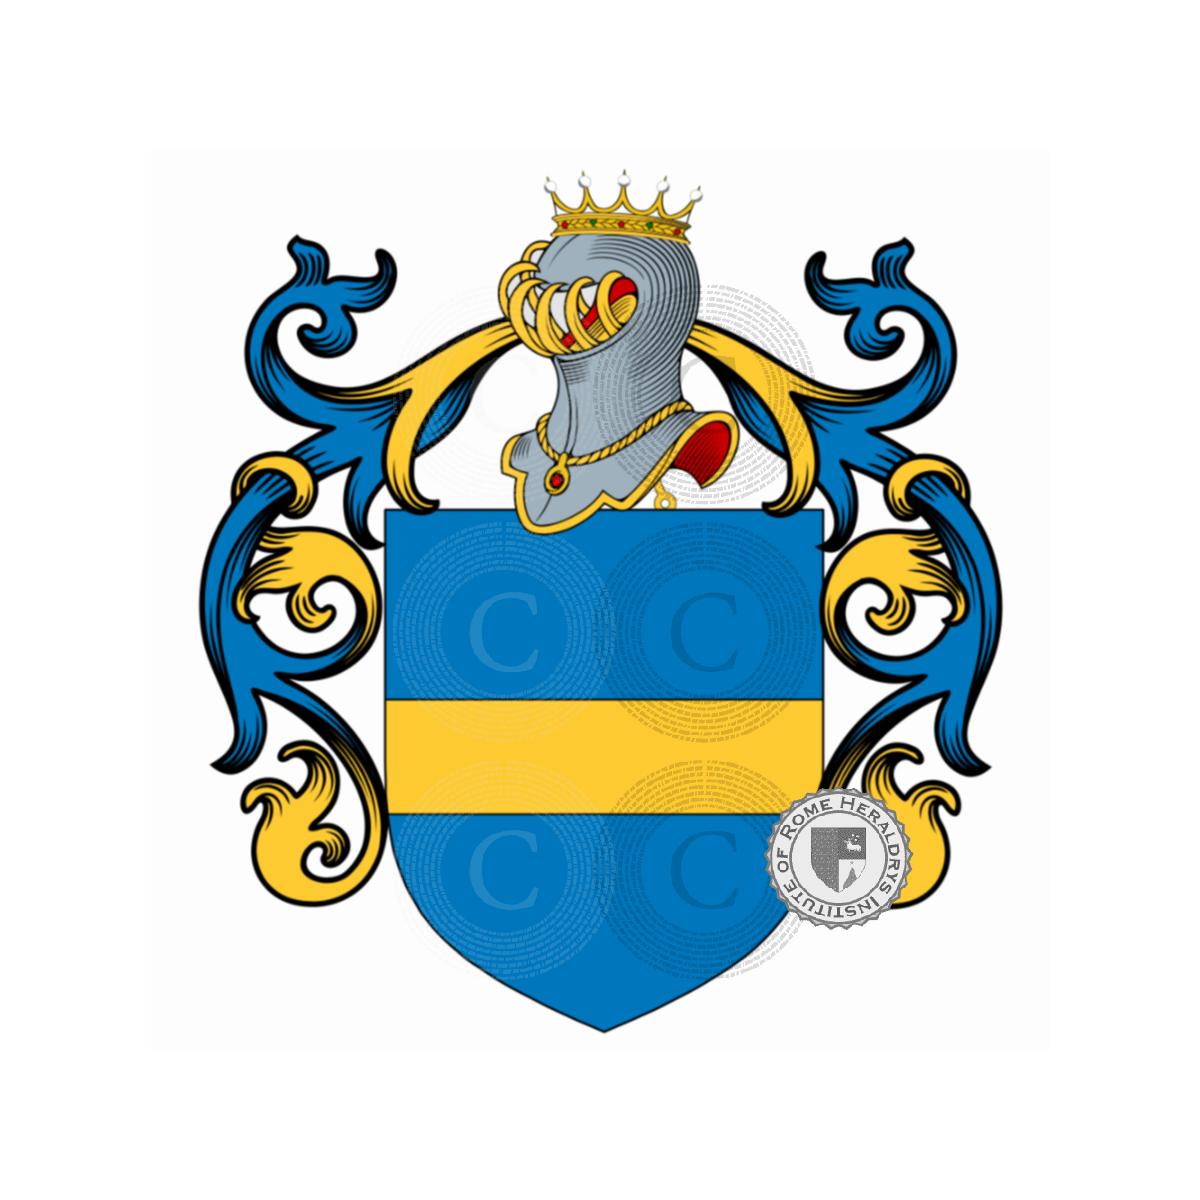 Coat of arms of familyFabbrini, Ciabattini,Fabbrini del Drago,Fabbrini del Lion Rosso,Fabbrini della Scala,Fabrini,Fabrini delle Stelle,Fambrini